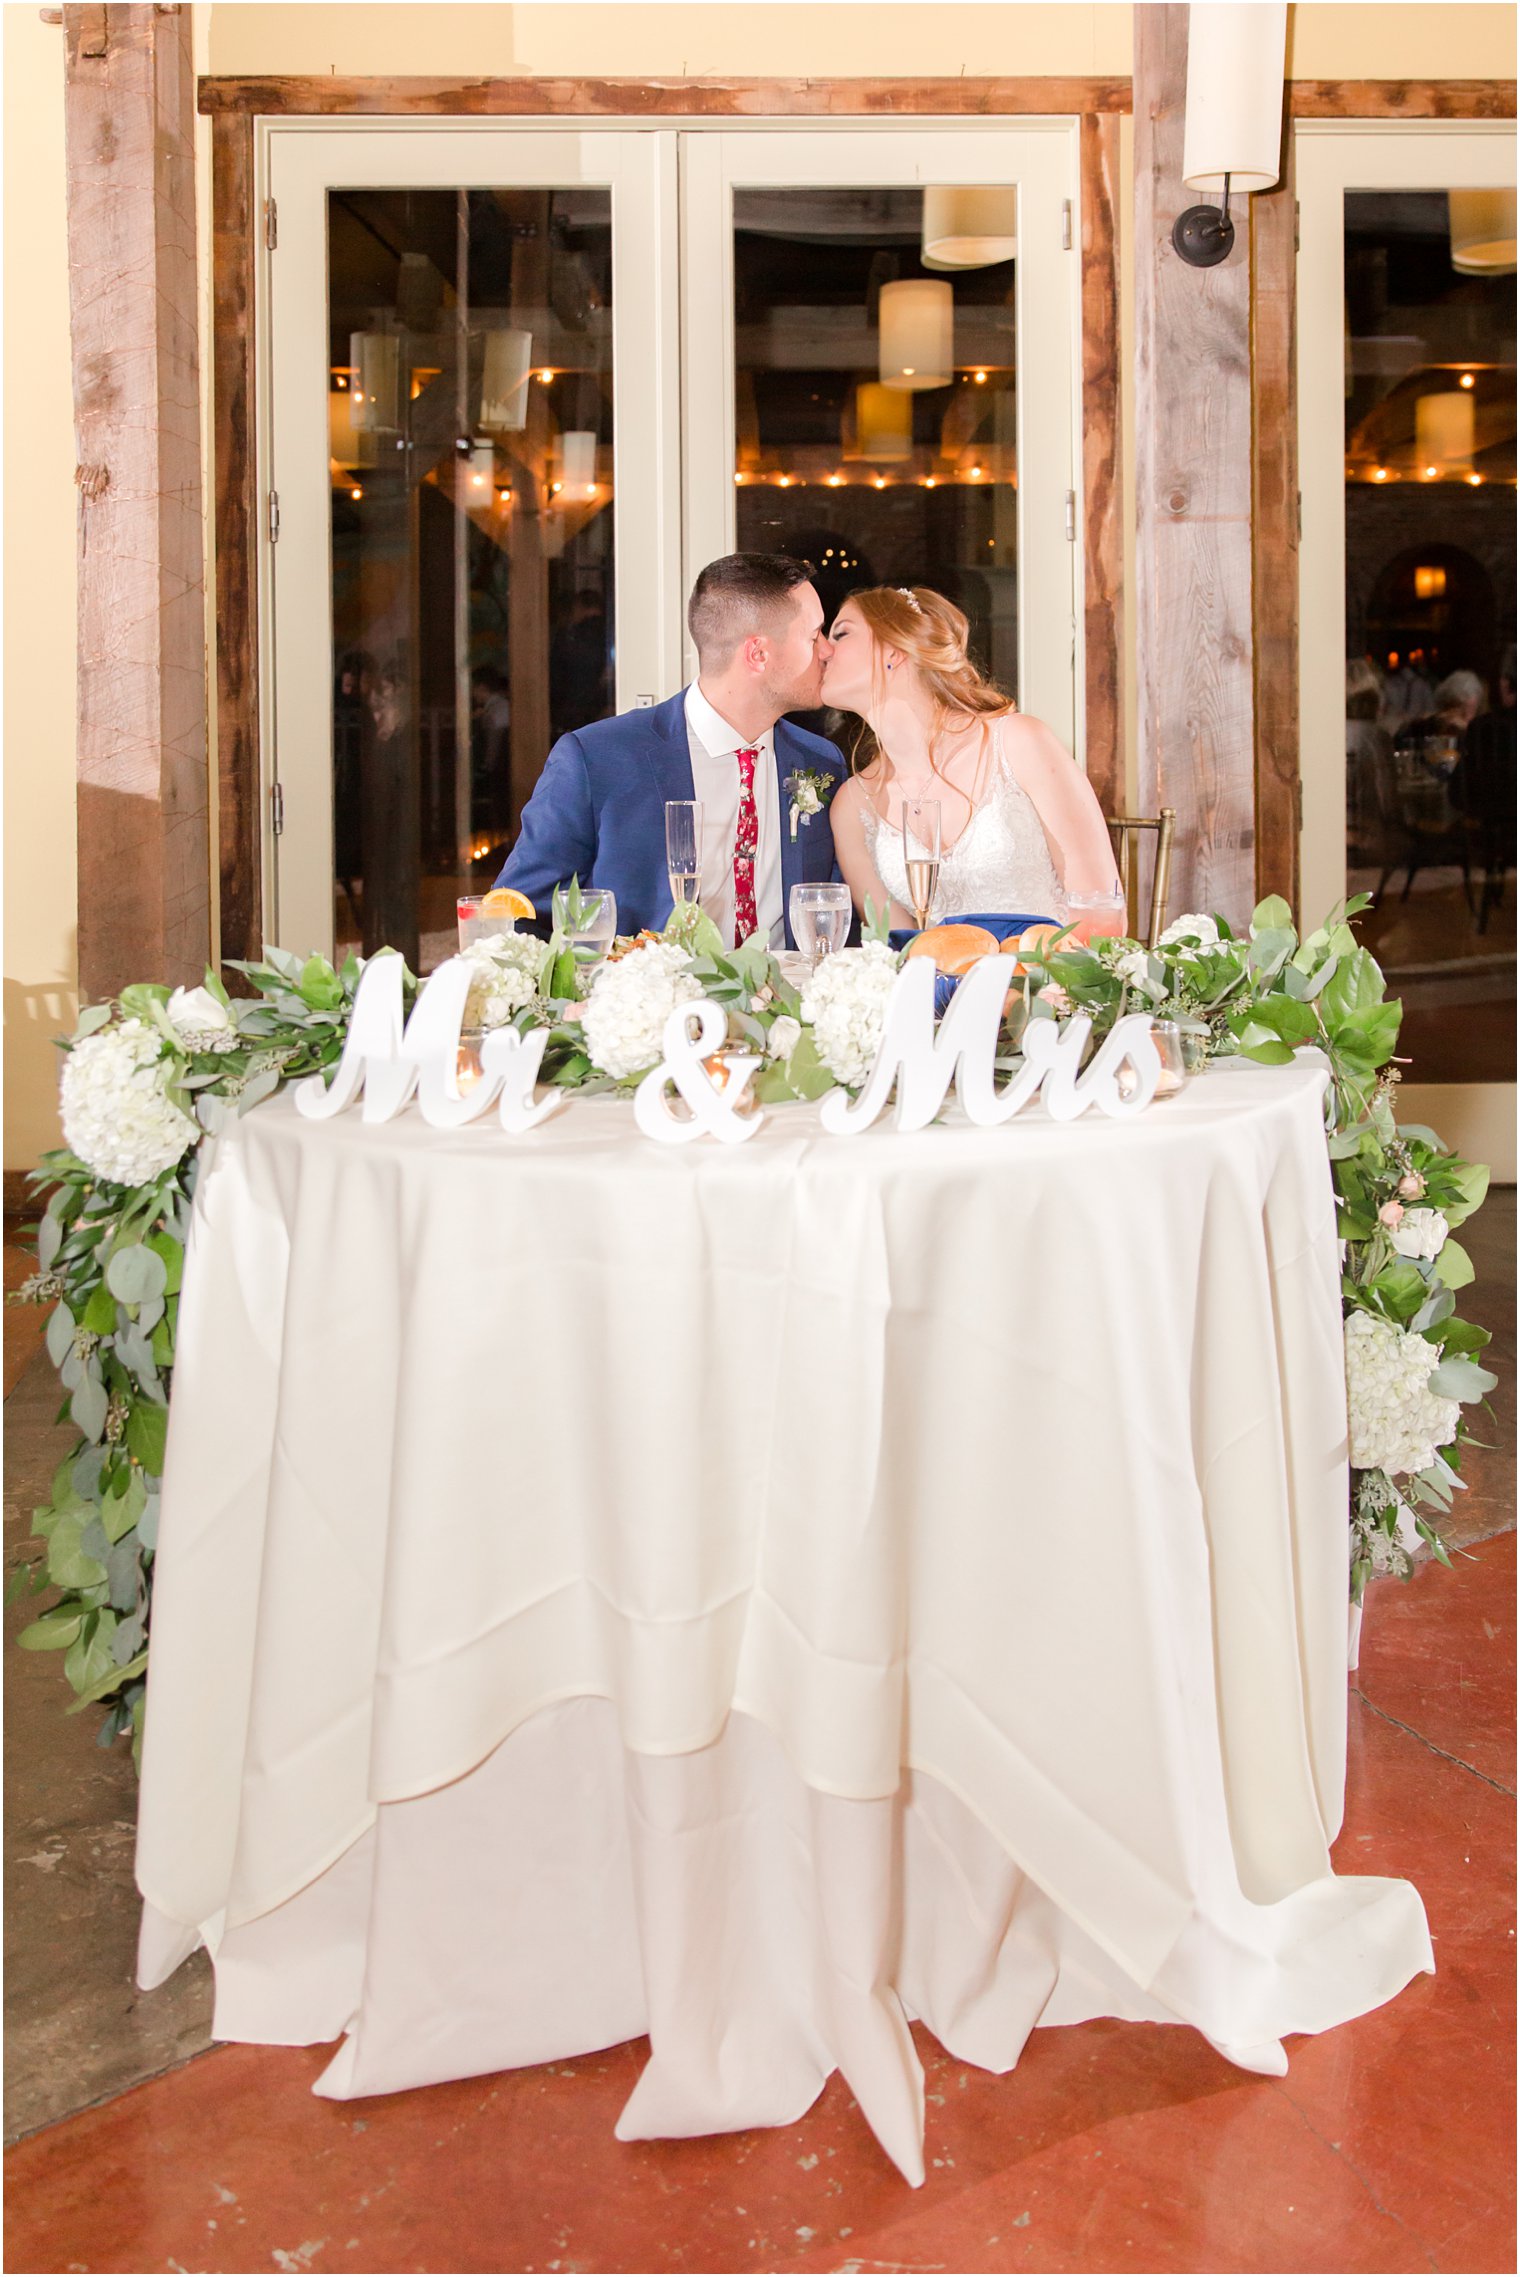 Newlyweds at sweetheart table at Laurita Winery in New Egypt NJ | NJ vineyard wedding venue